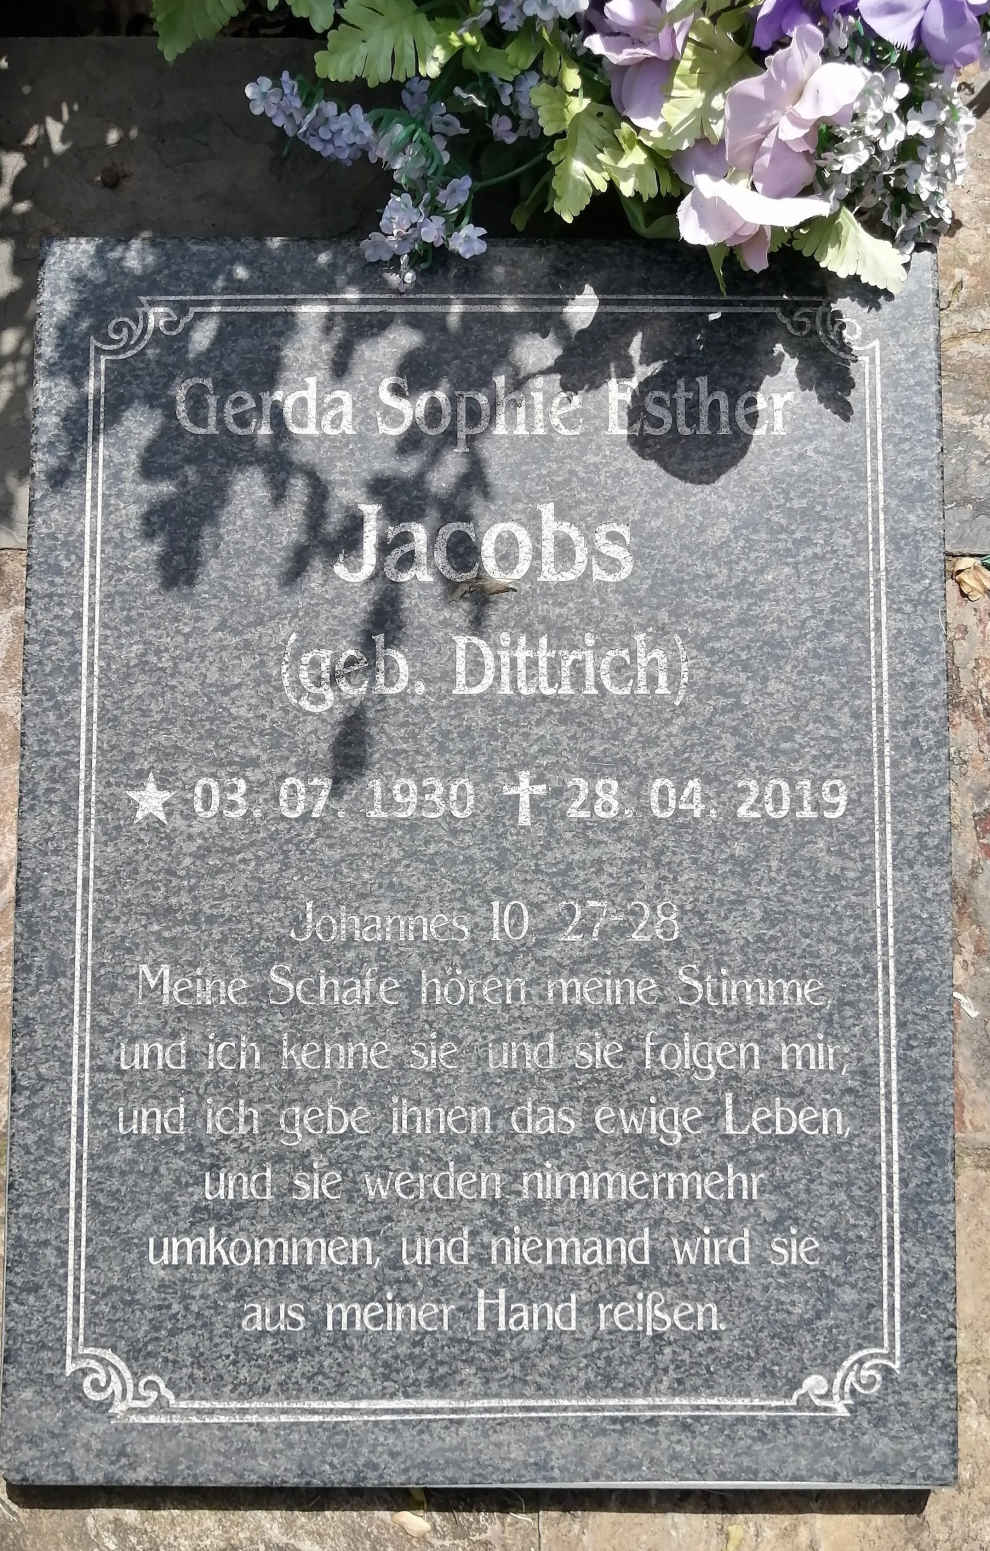 JACOBS Gerda Sophie Esther nee DITTRICH 1930-2019